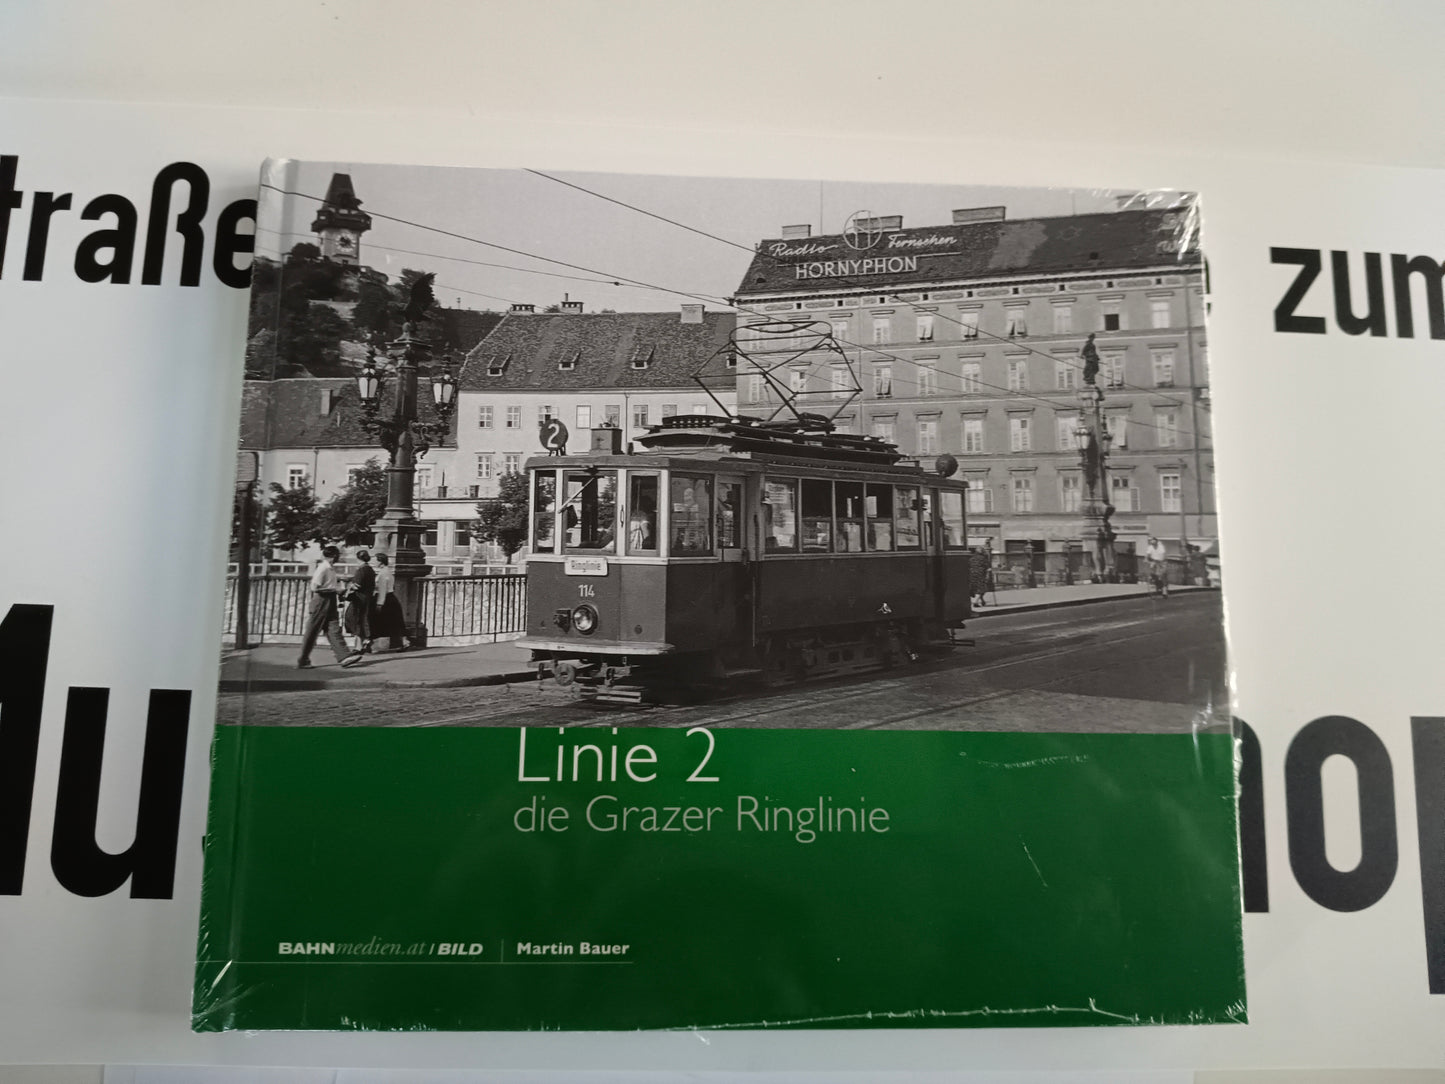 Linie 2 - die Grazer Ringlinie